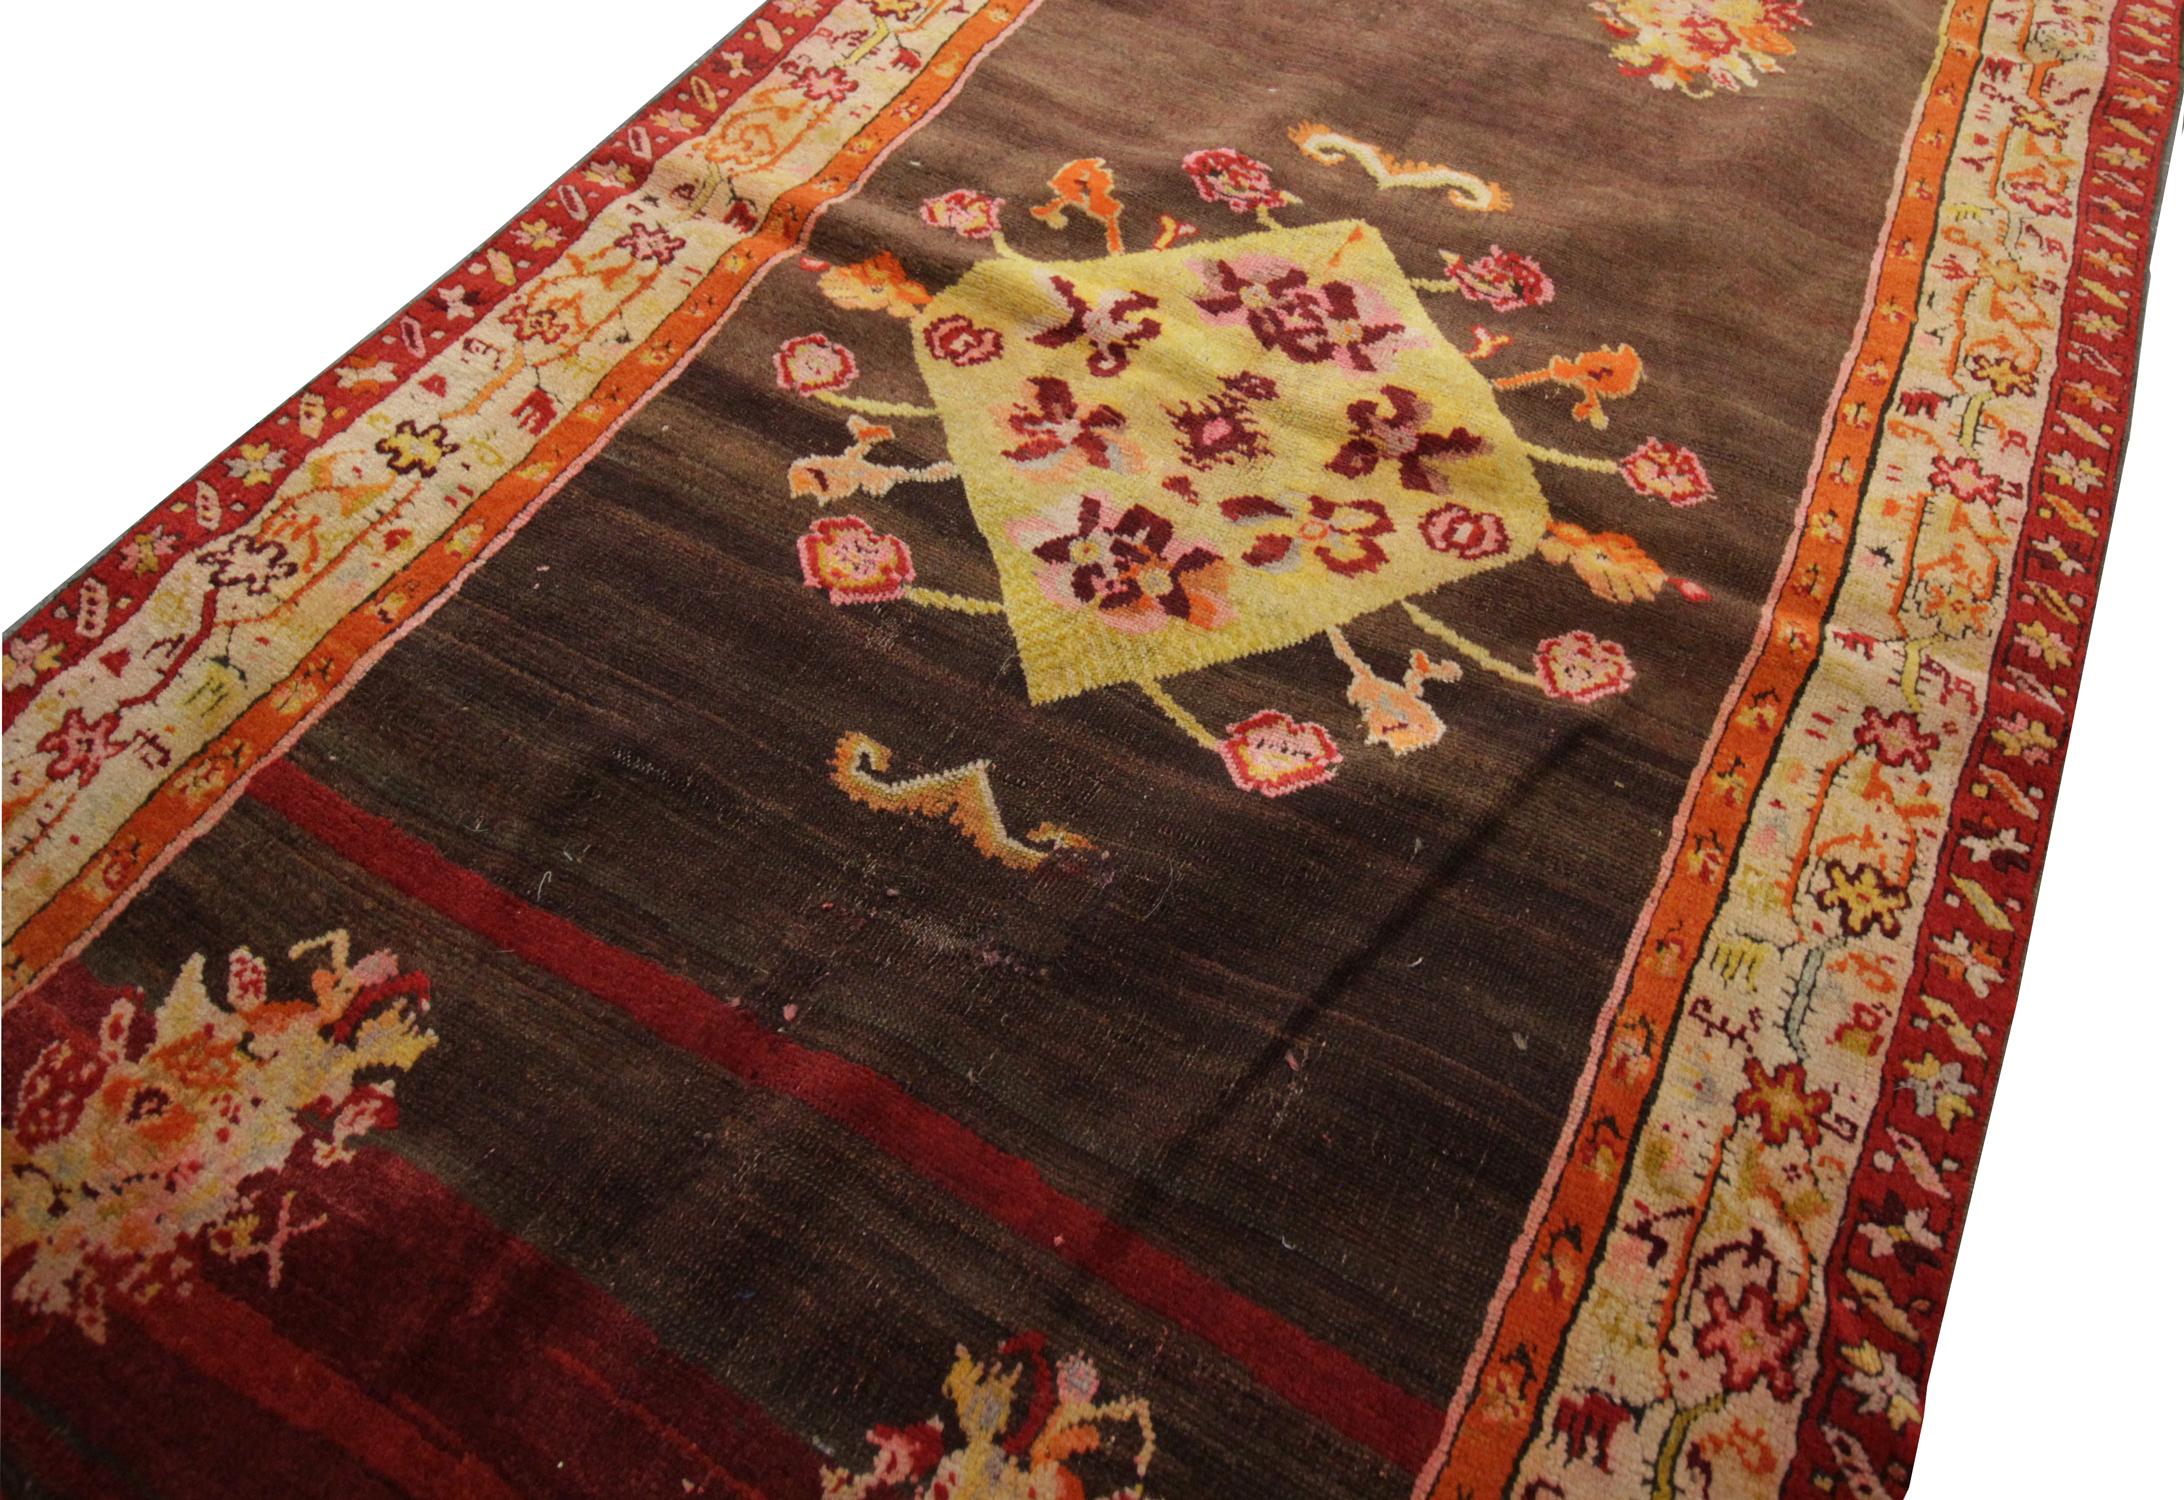 Tribal Antique Rug, Handmade Carpet Central Medallion Oriental Living Room Rugs Sale For Sale